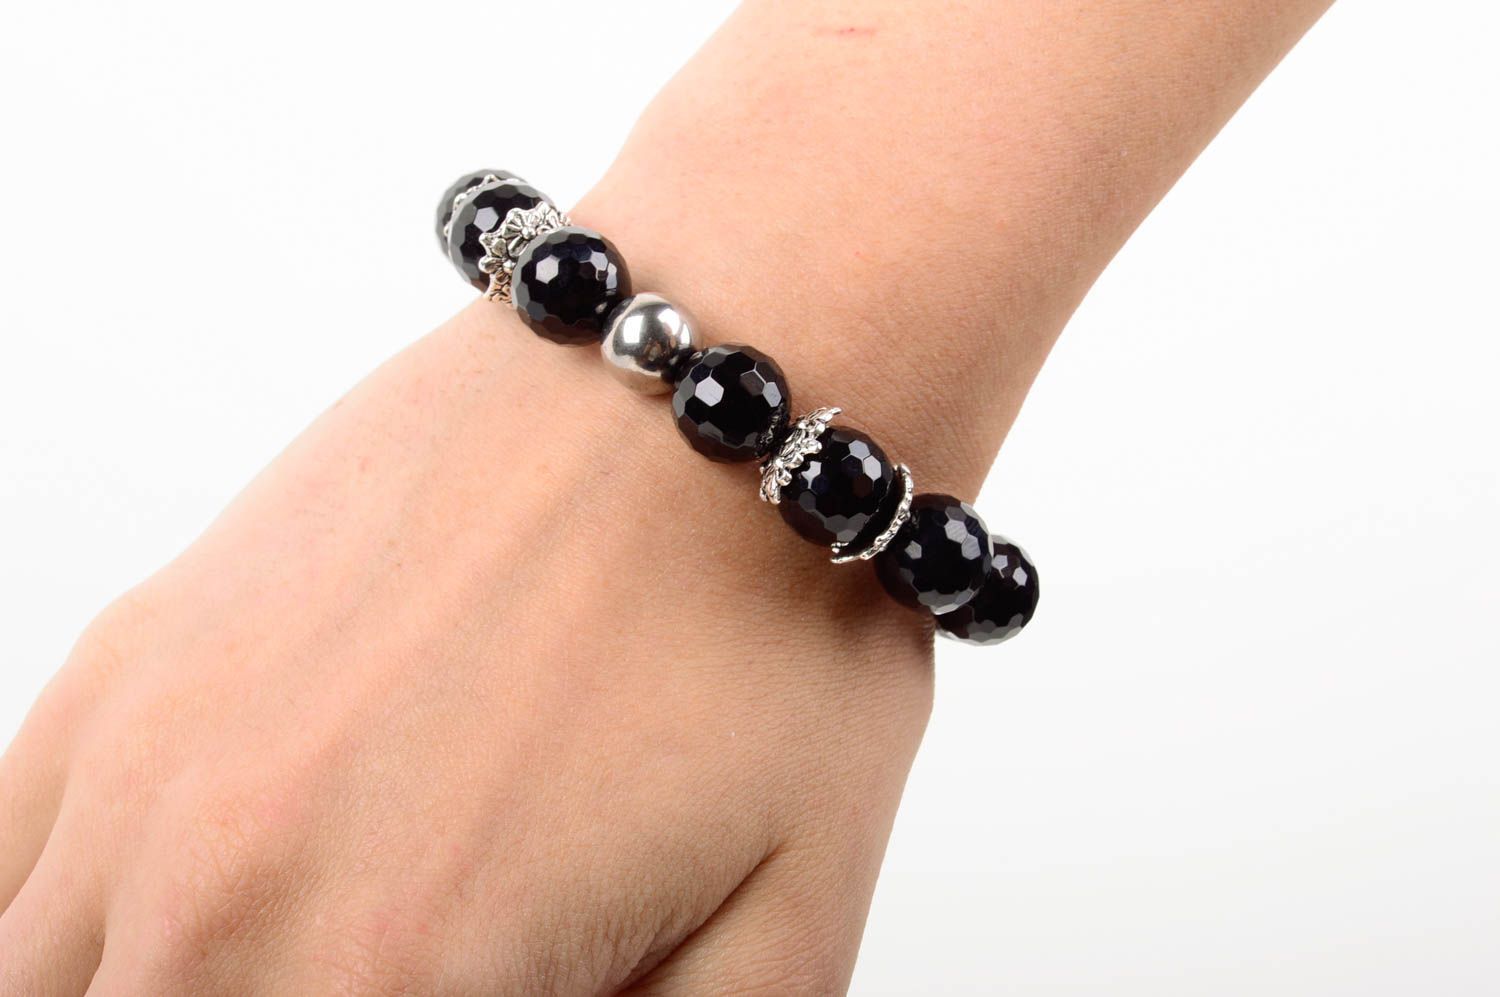 Handmade bracelet stone bracelet stylish accessory for women gift ideas photo 2